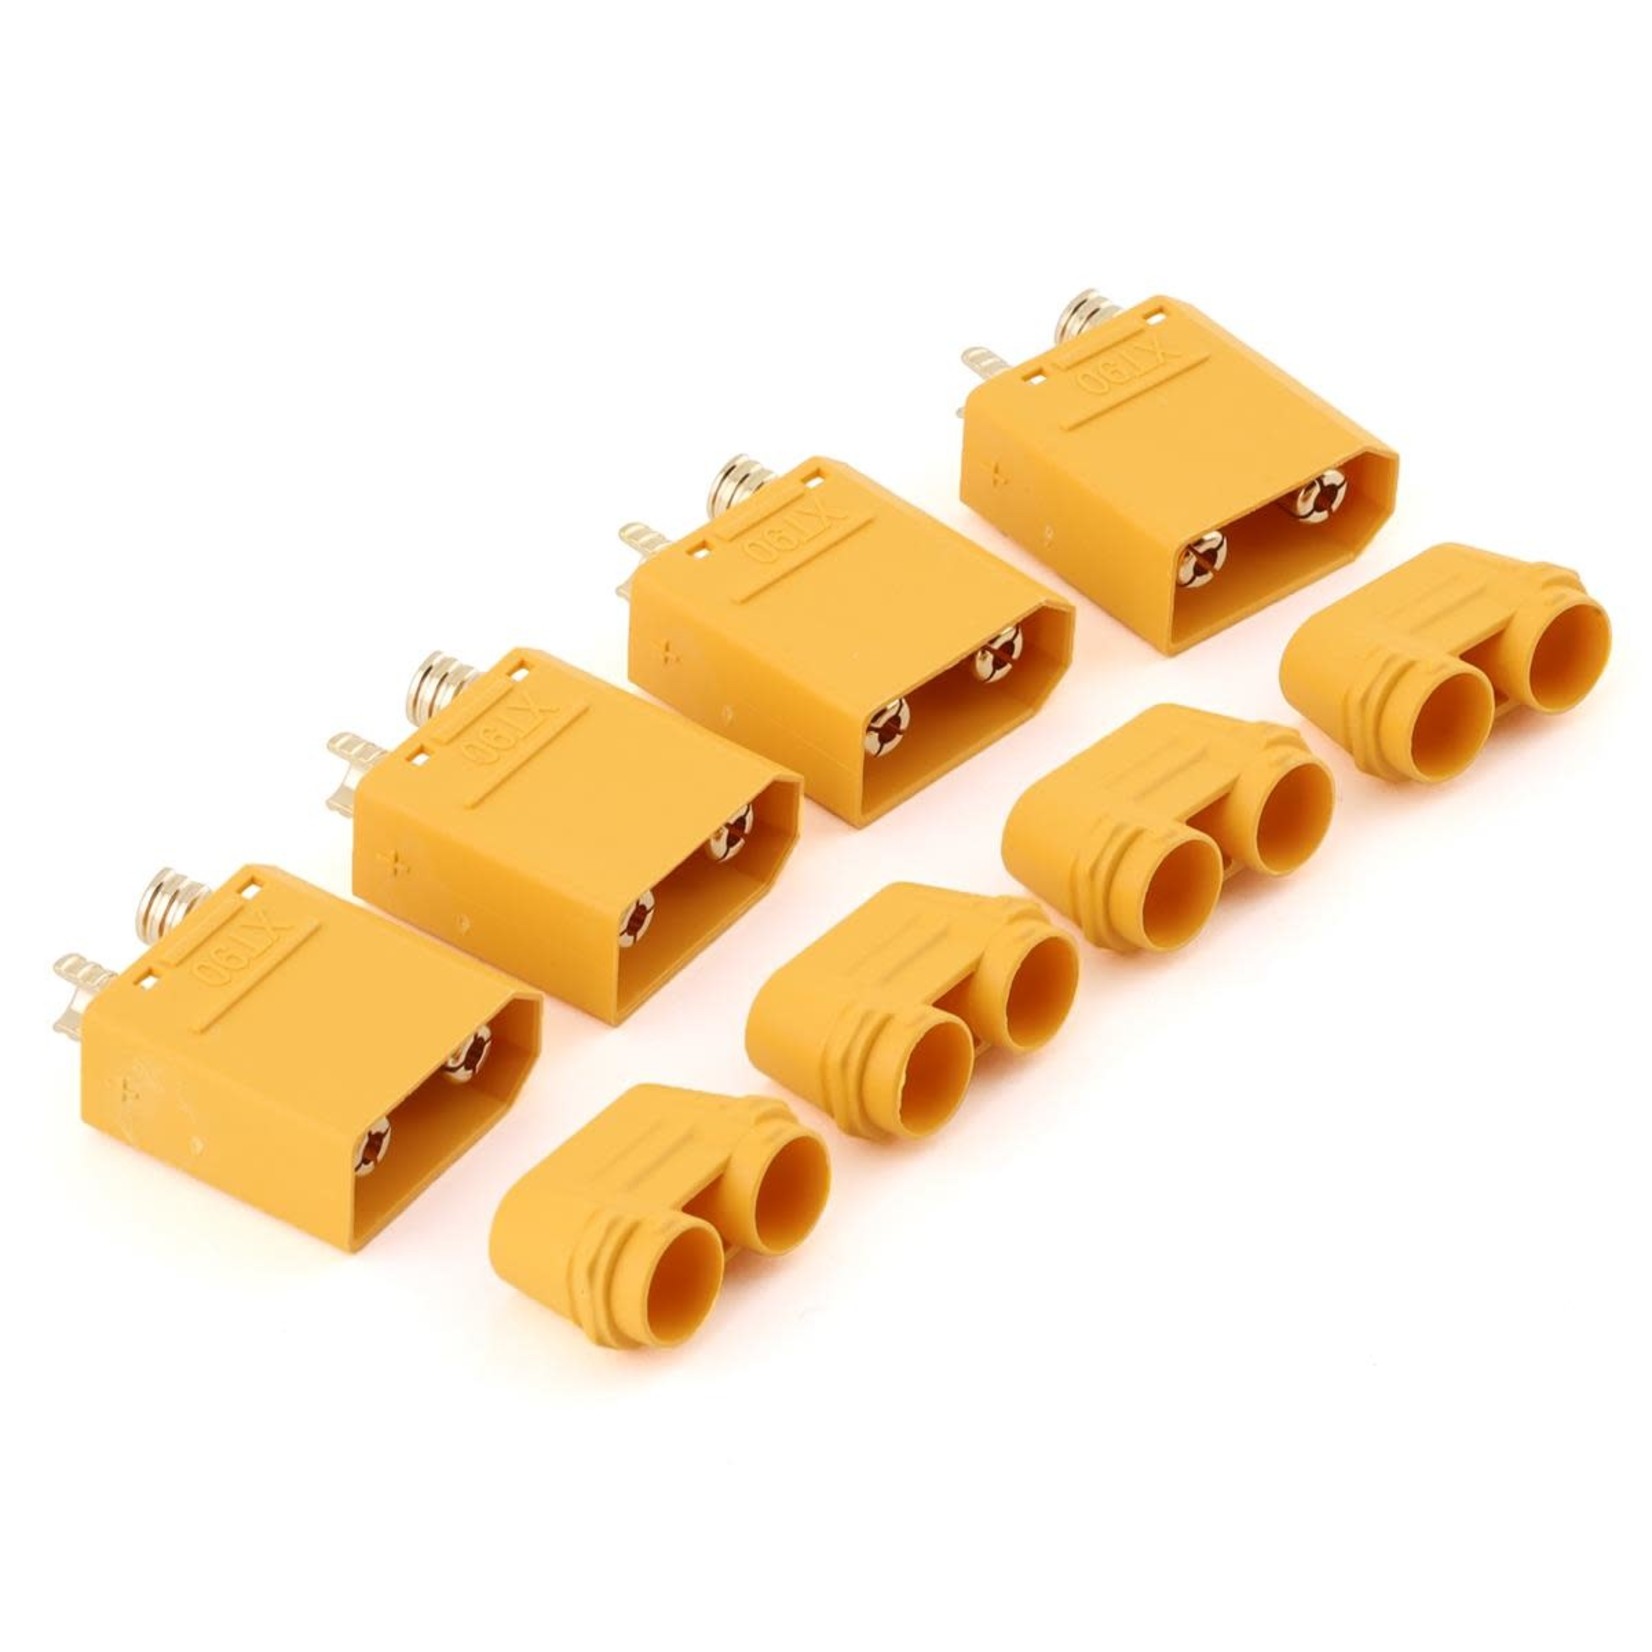 Maclan Maclan XT90 Connectors (4 Male) (Yellow) # MCL4113